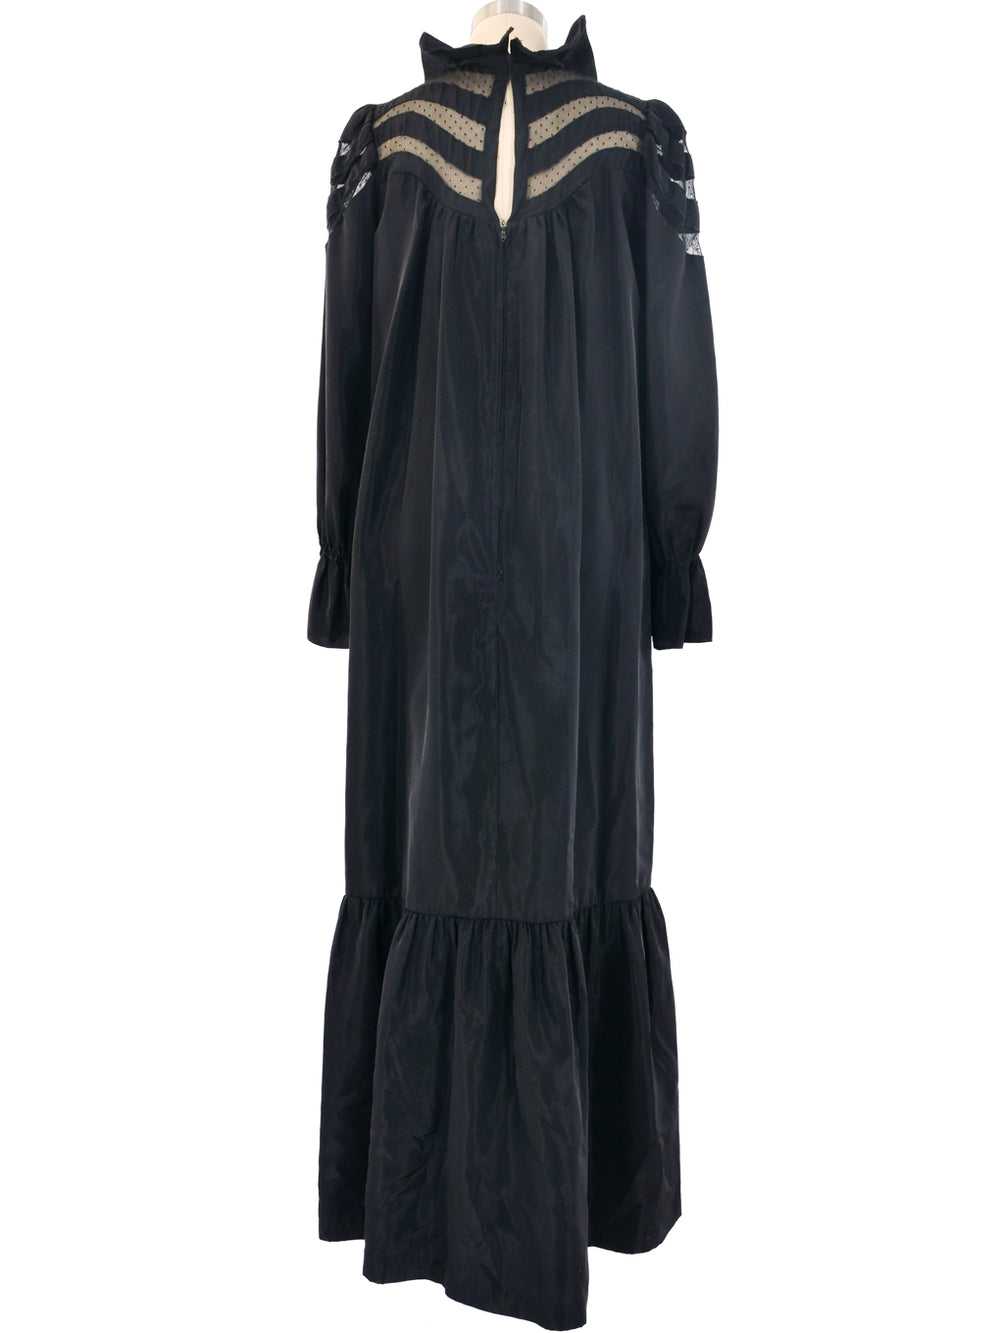 Christian Dior Taffeta Nightgown - image 5